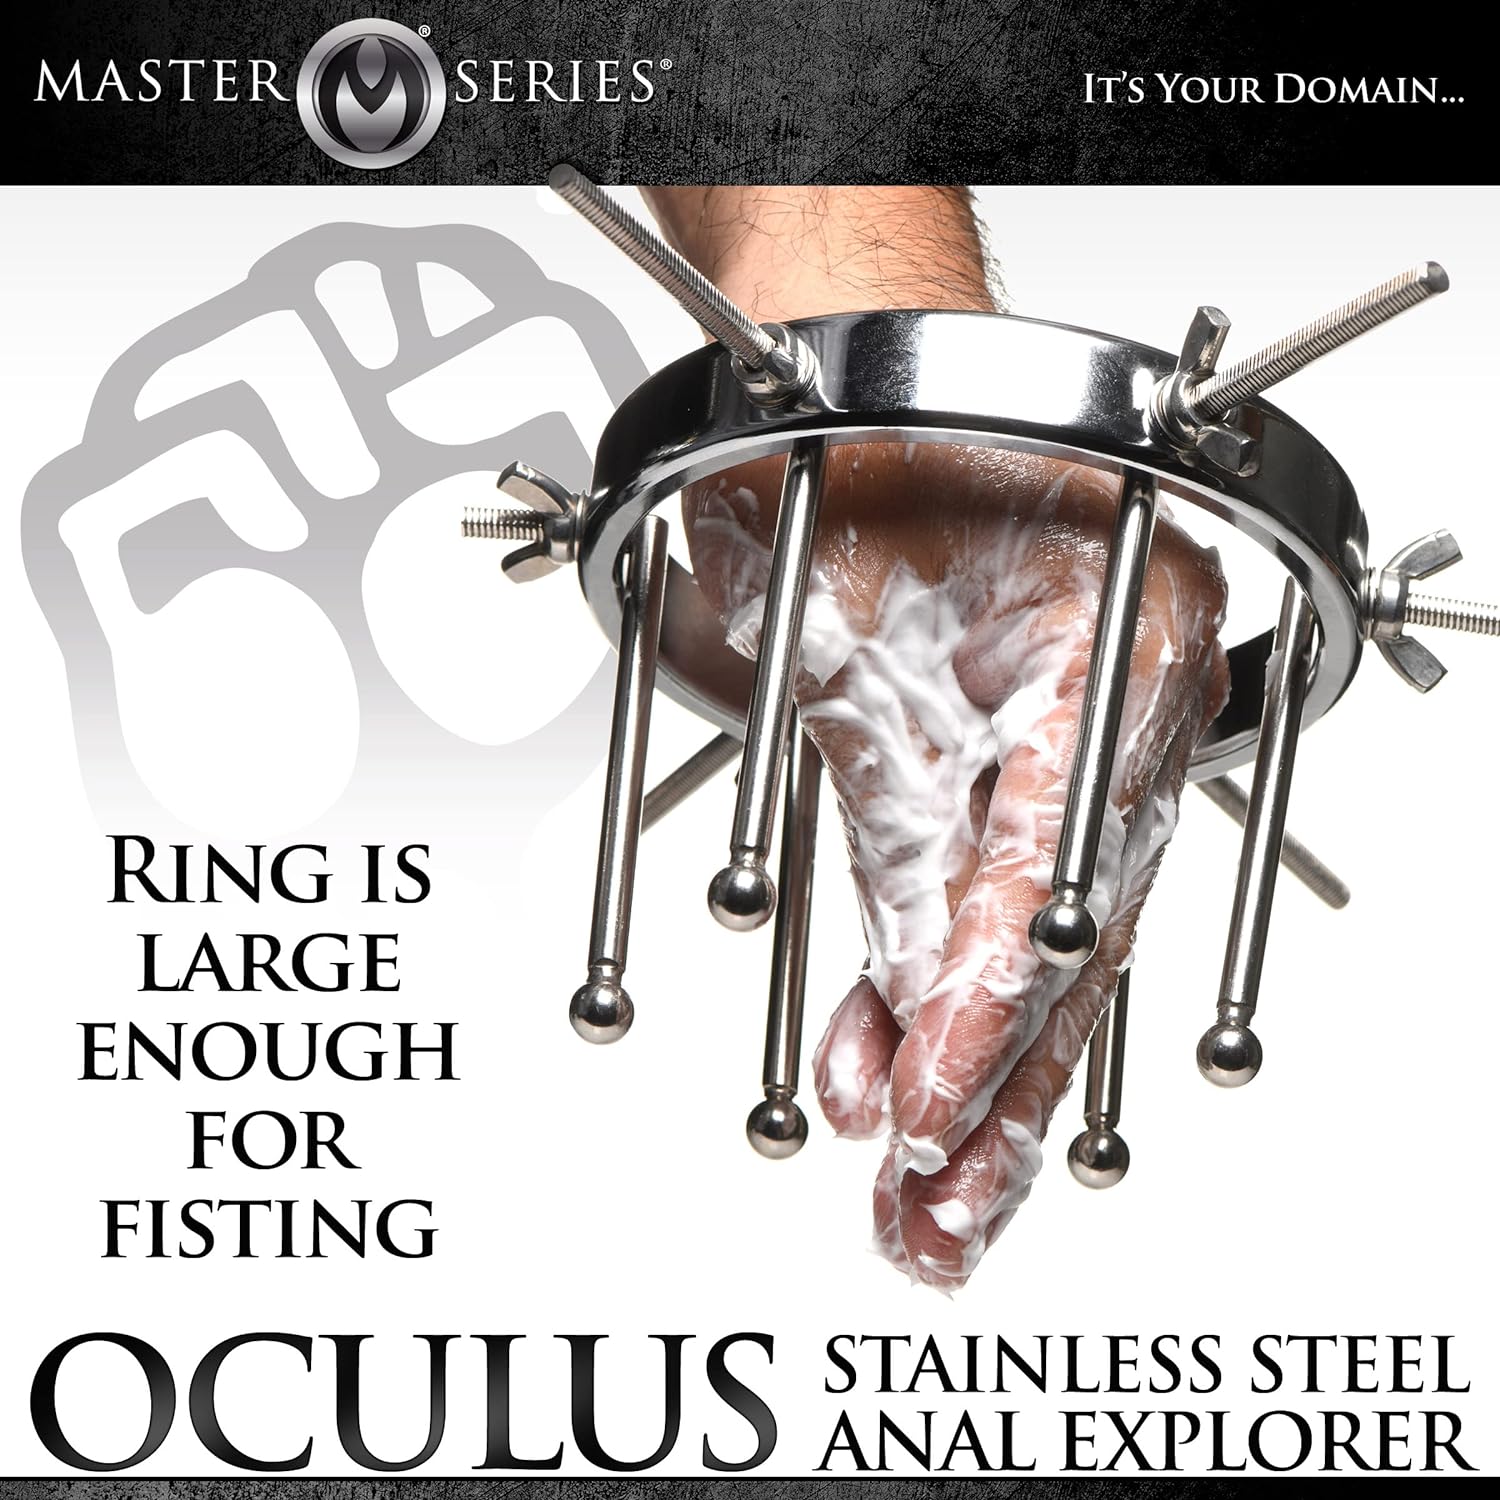 MASTER SERIES Oculus Stainless Steel Anal Explorer